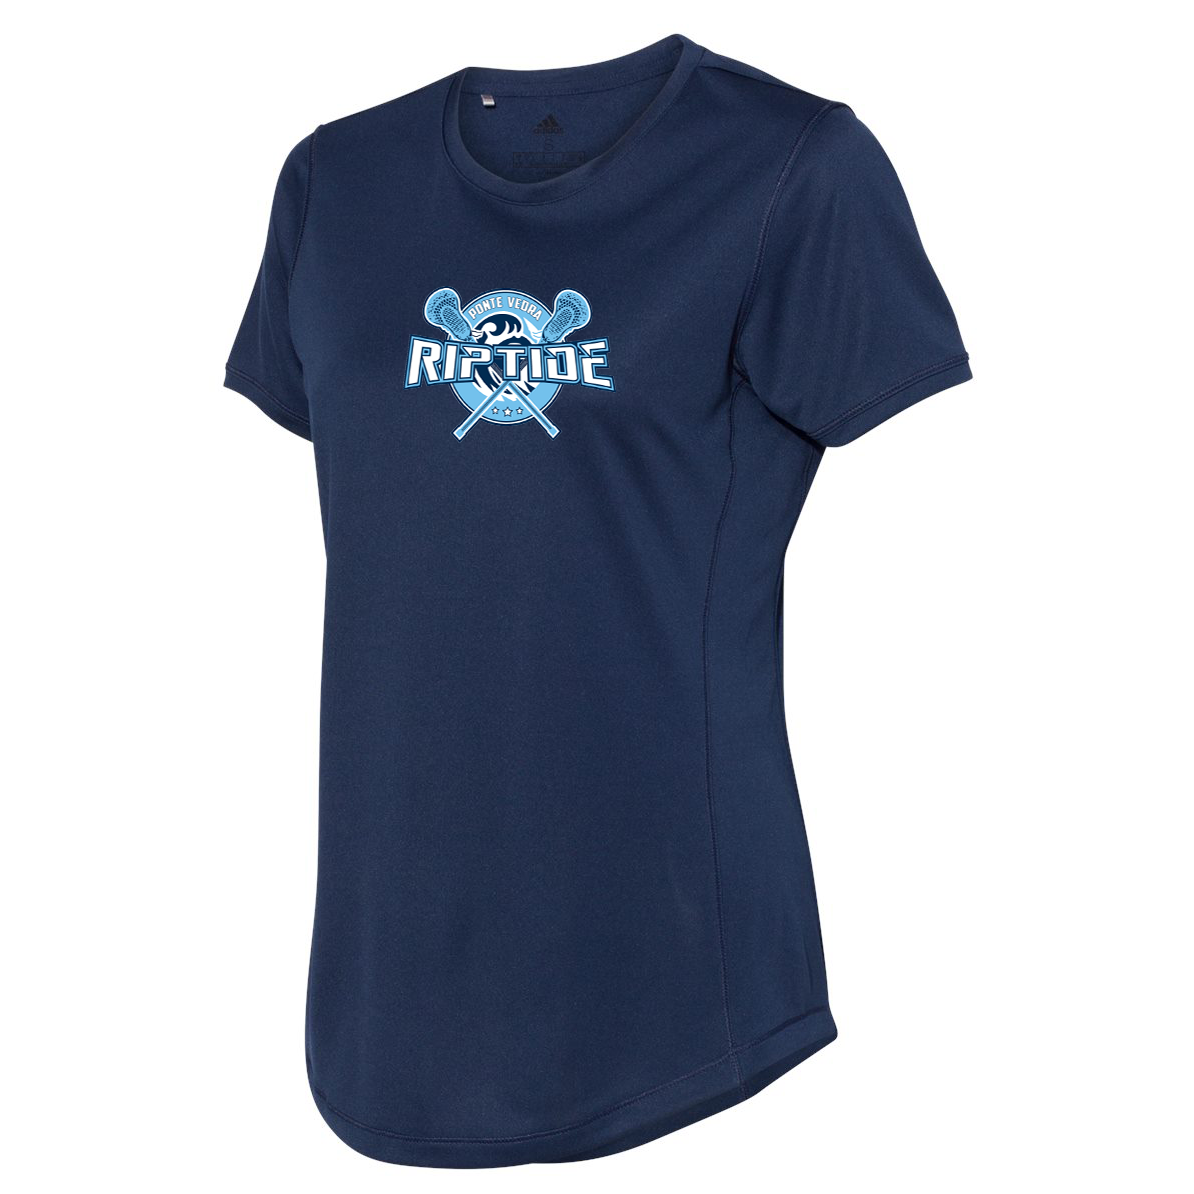 Ponte Vedra Riptide Lacrosse Women's Adidas Sport T-Shirt